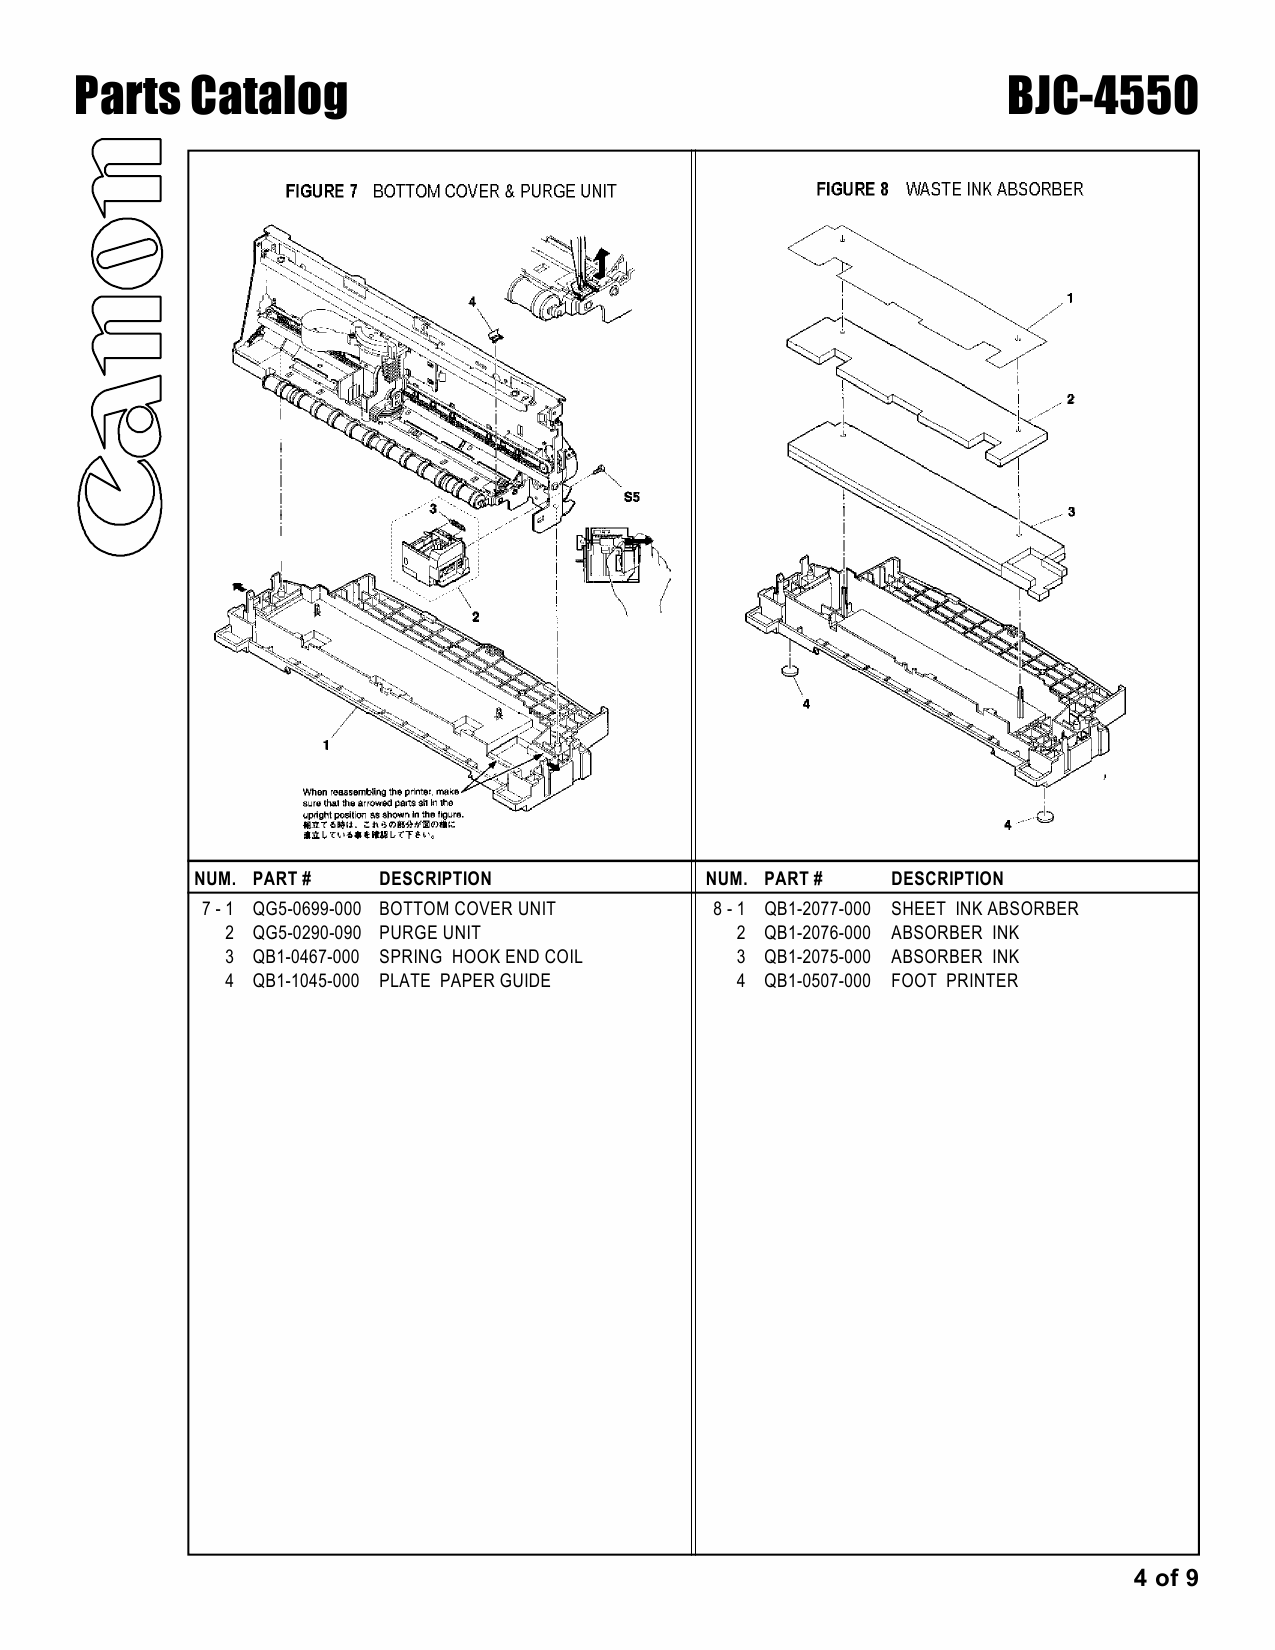 Canon BubbleJet BJC-4550 Parts Catalog Manual-4